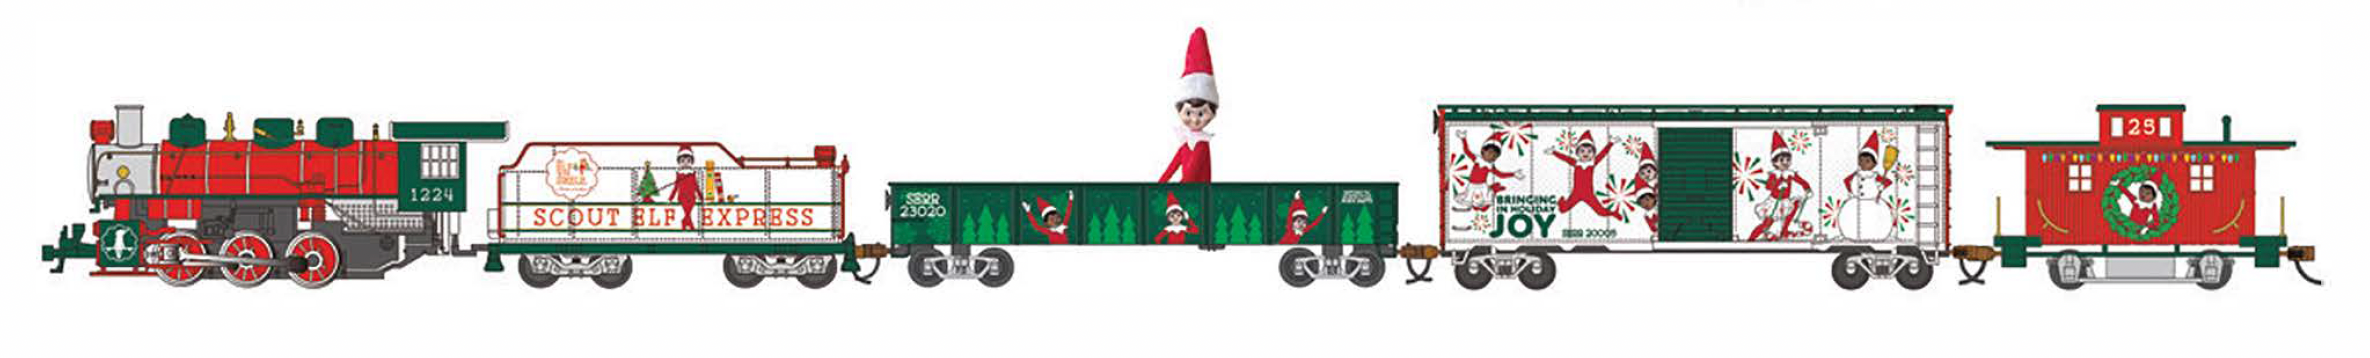 Bachmann 00779 HO Scale The Elf on the Shelf® Scout Elf Express Model Train Set